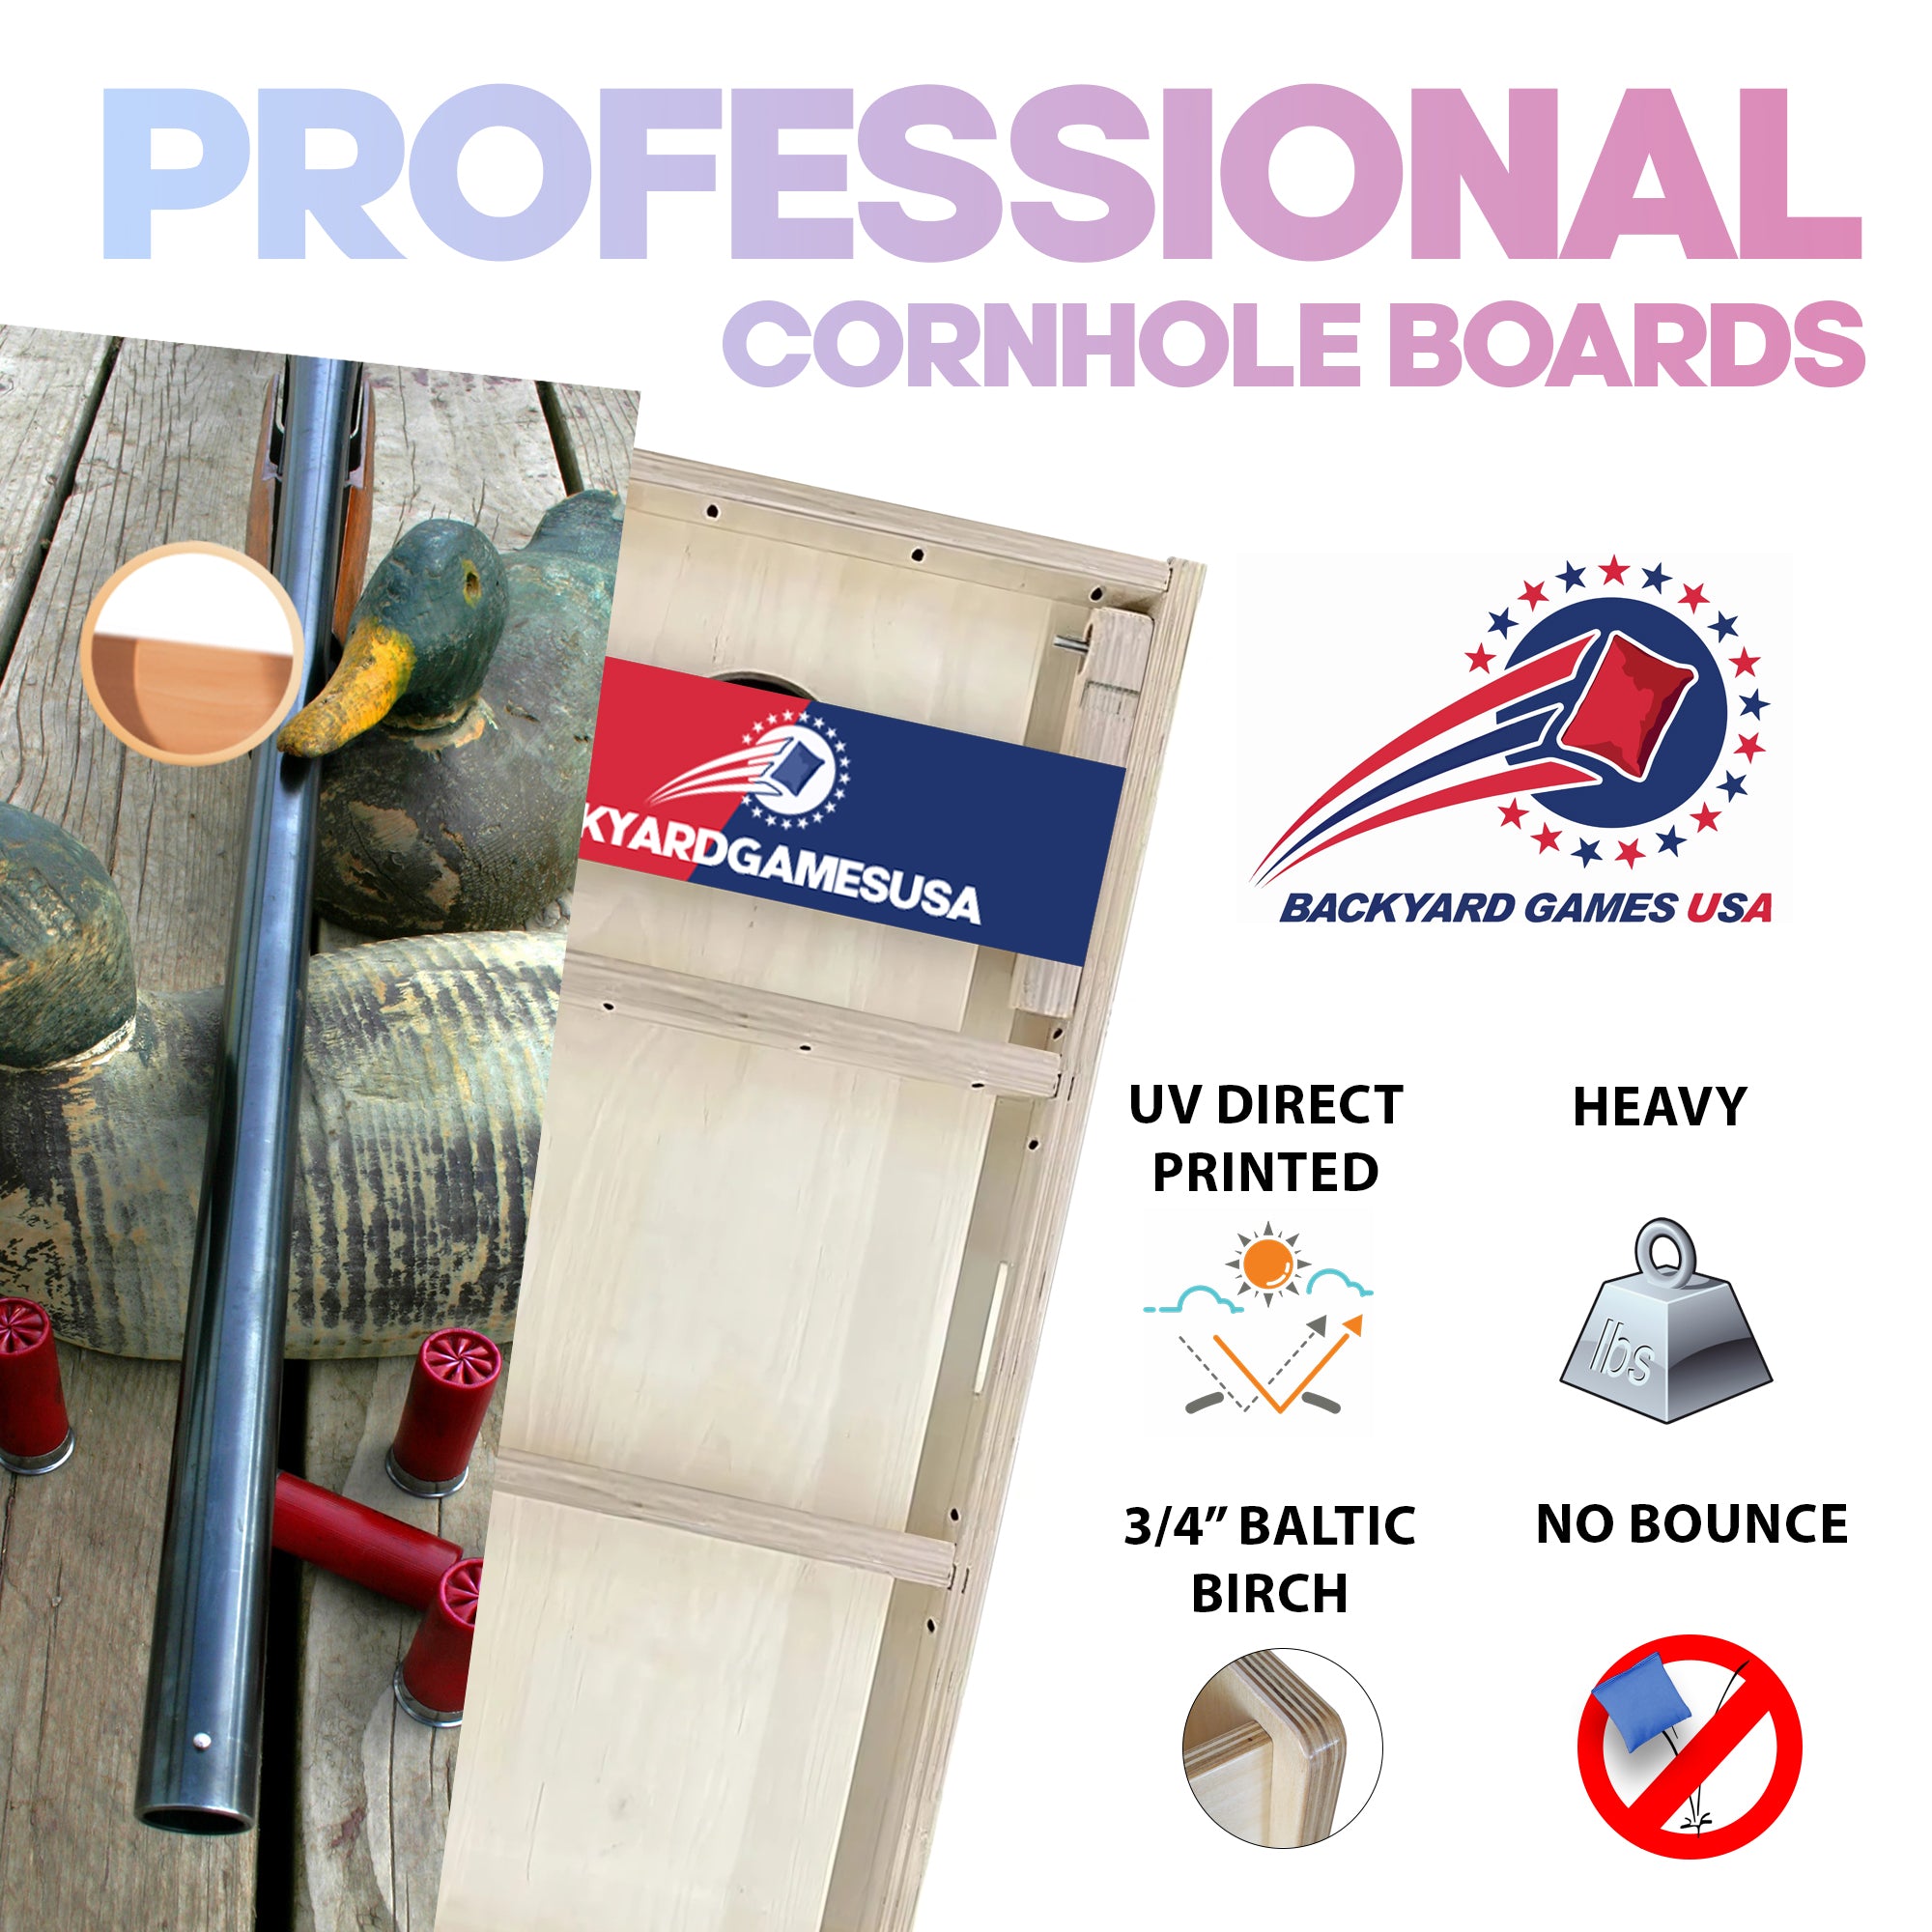 Duck Hunting Professional Cornhole Boards